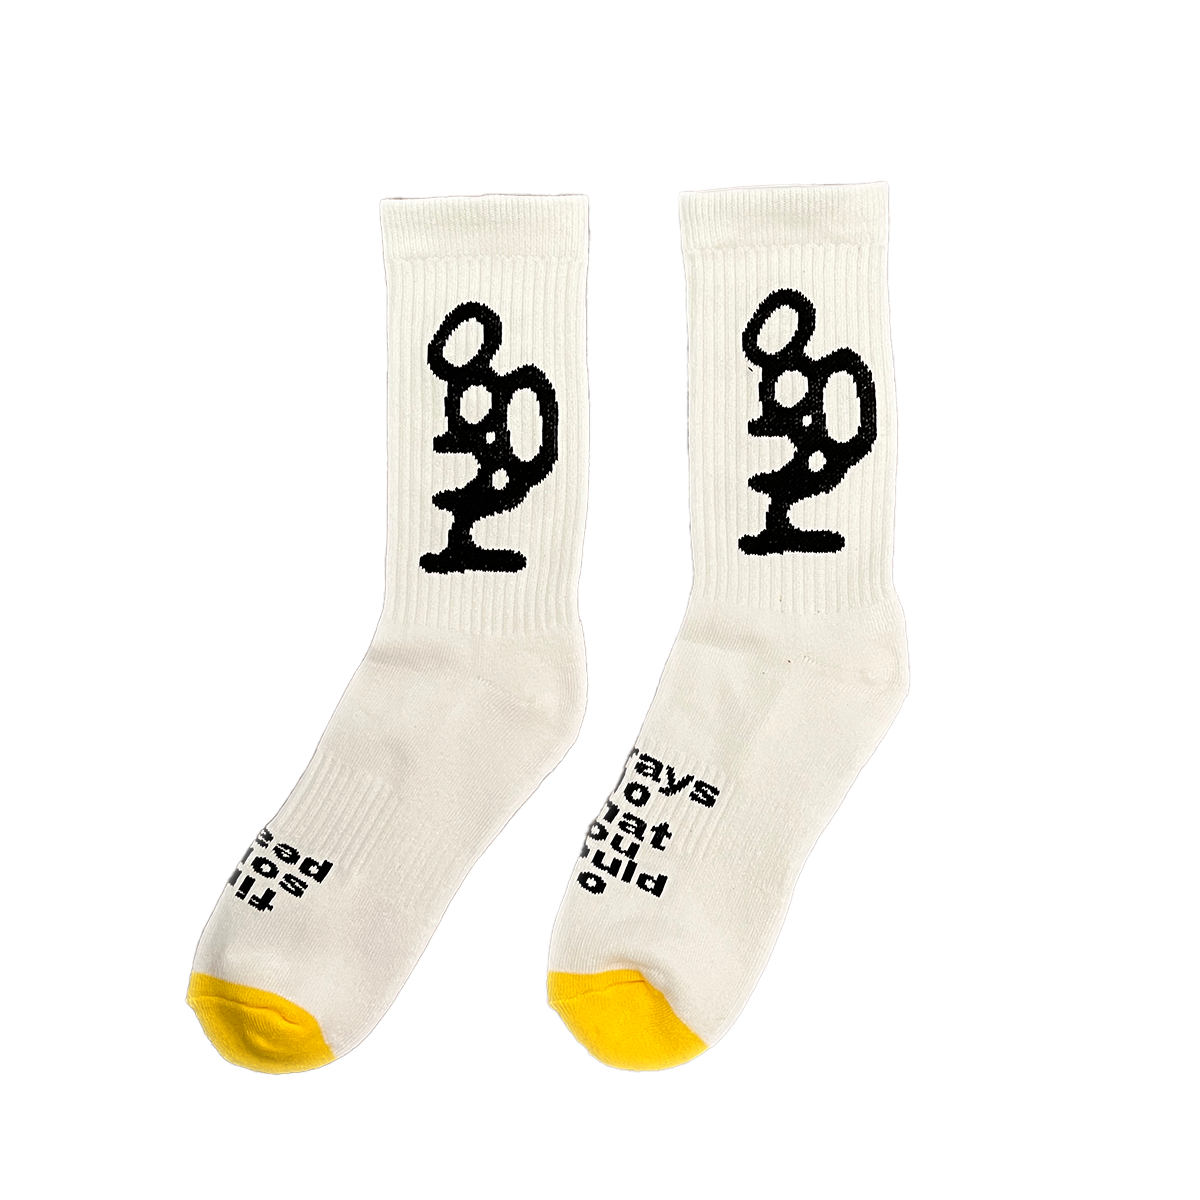 Loyle Carner - hugo x always: Socks - White/Yellow